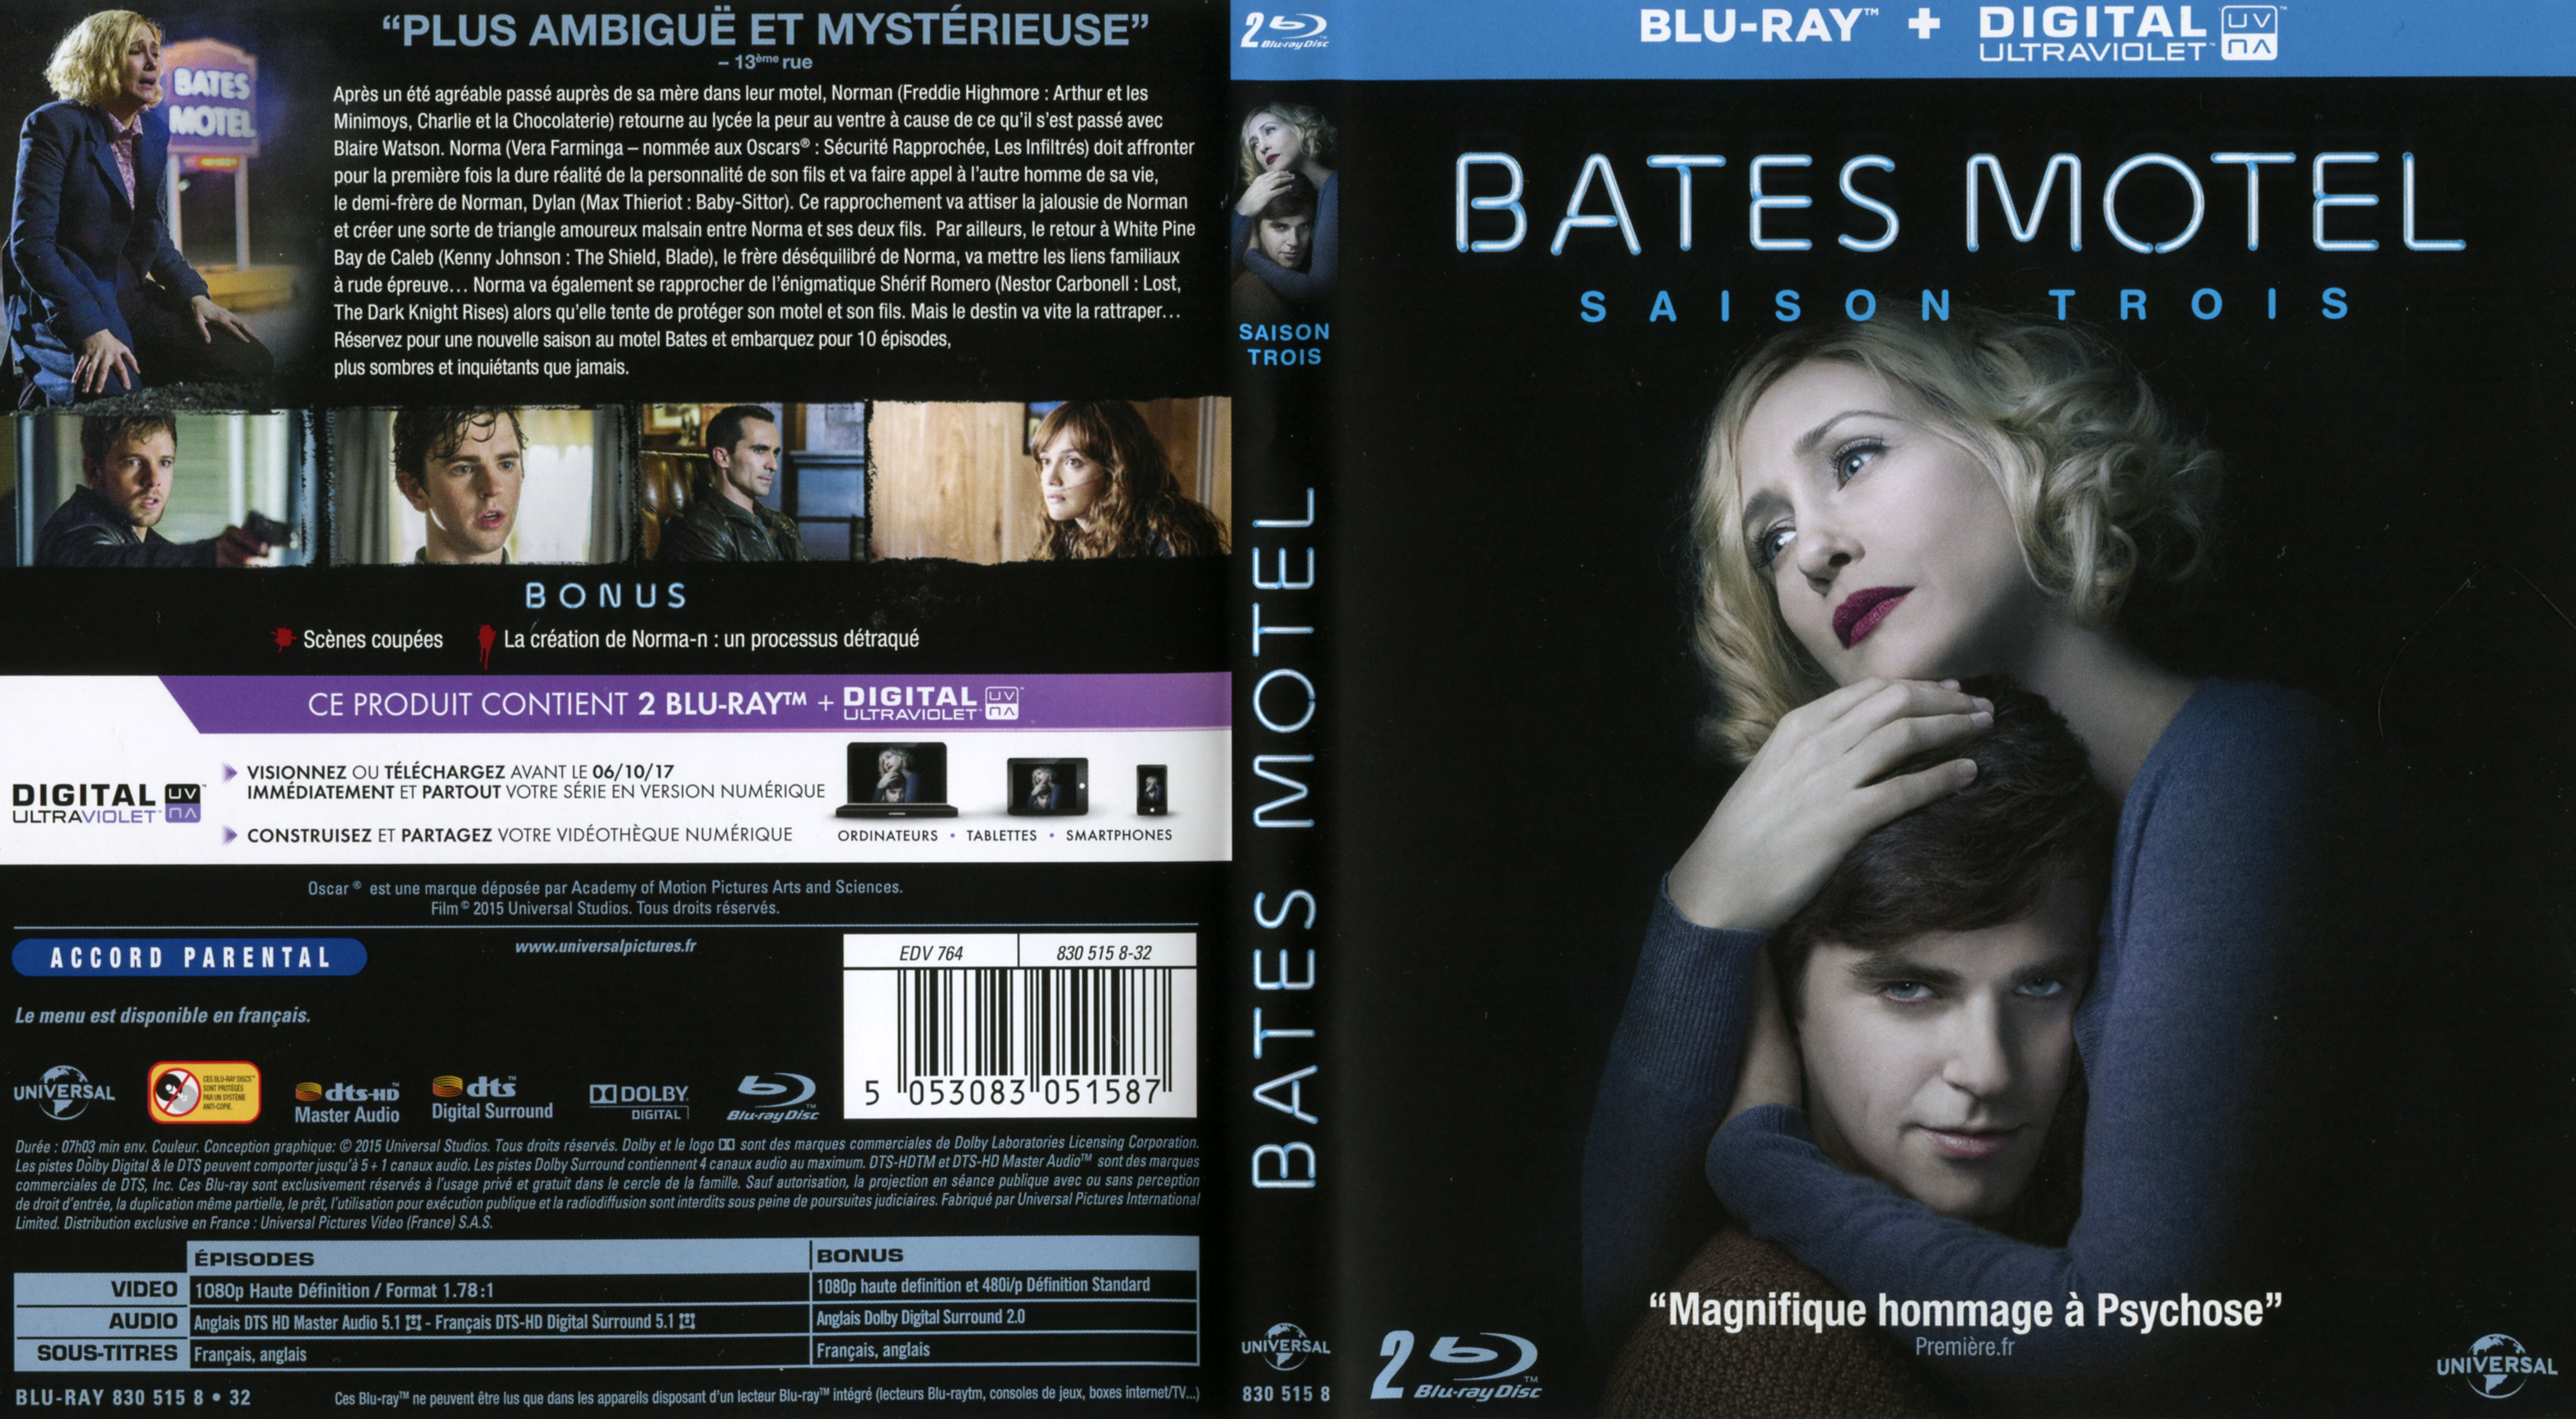 Jaquette DVD Bates motel Saison 3 (BLU-RAY)